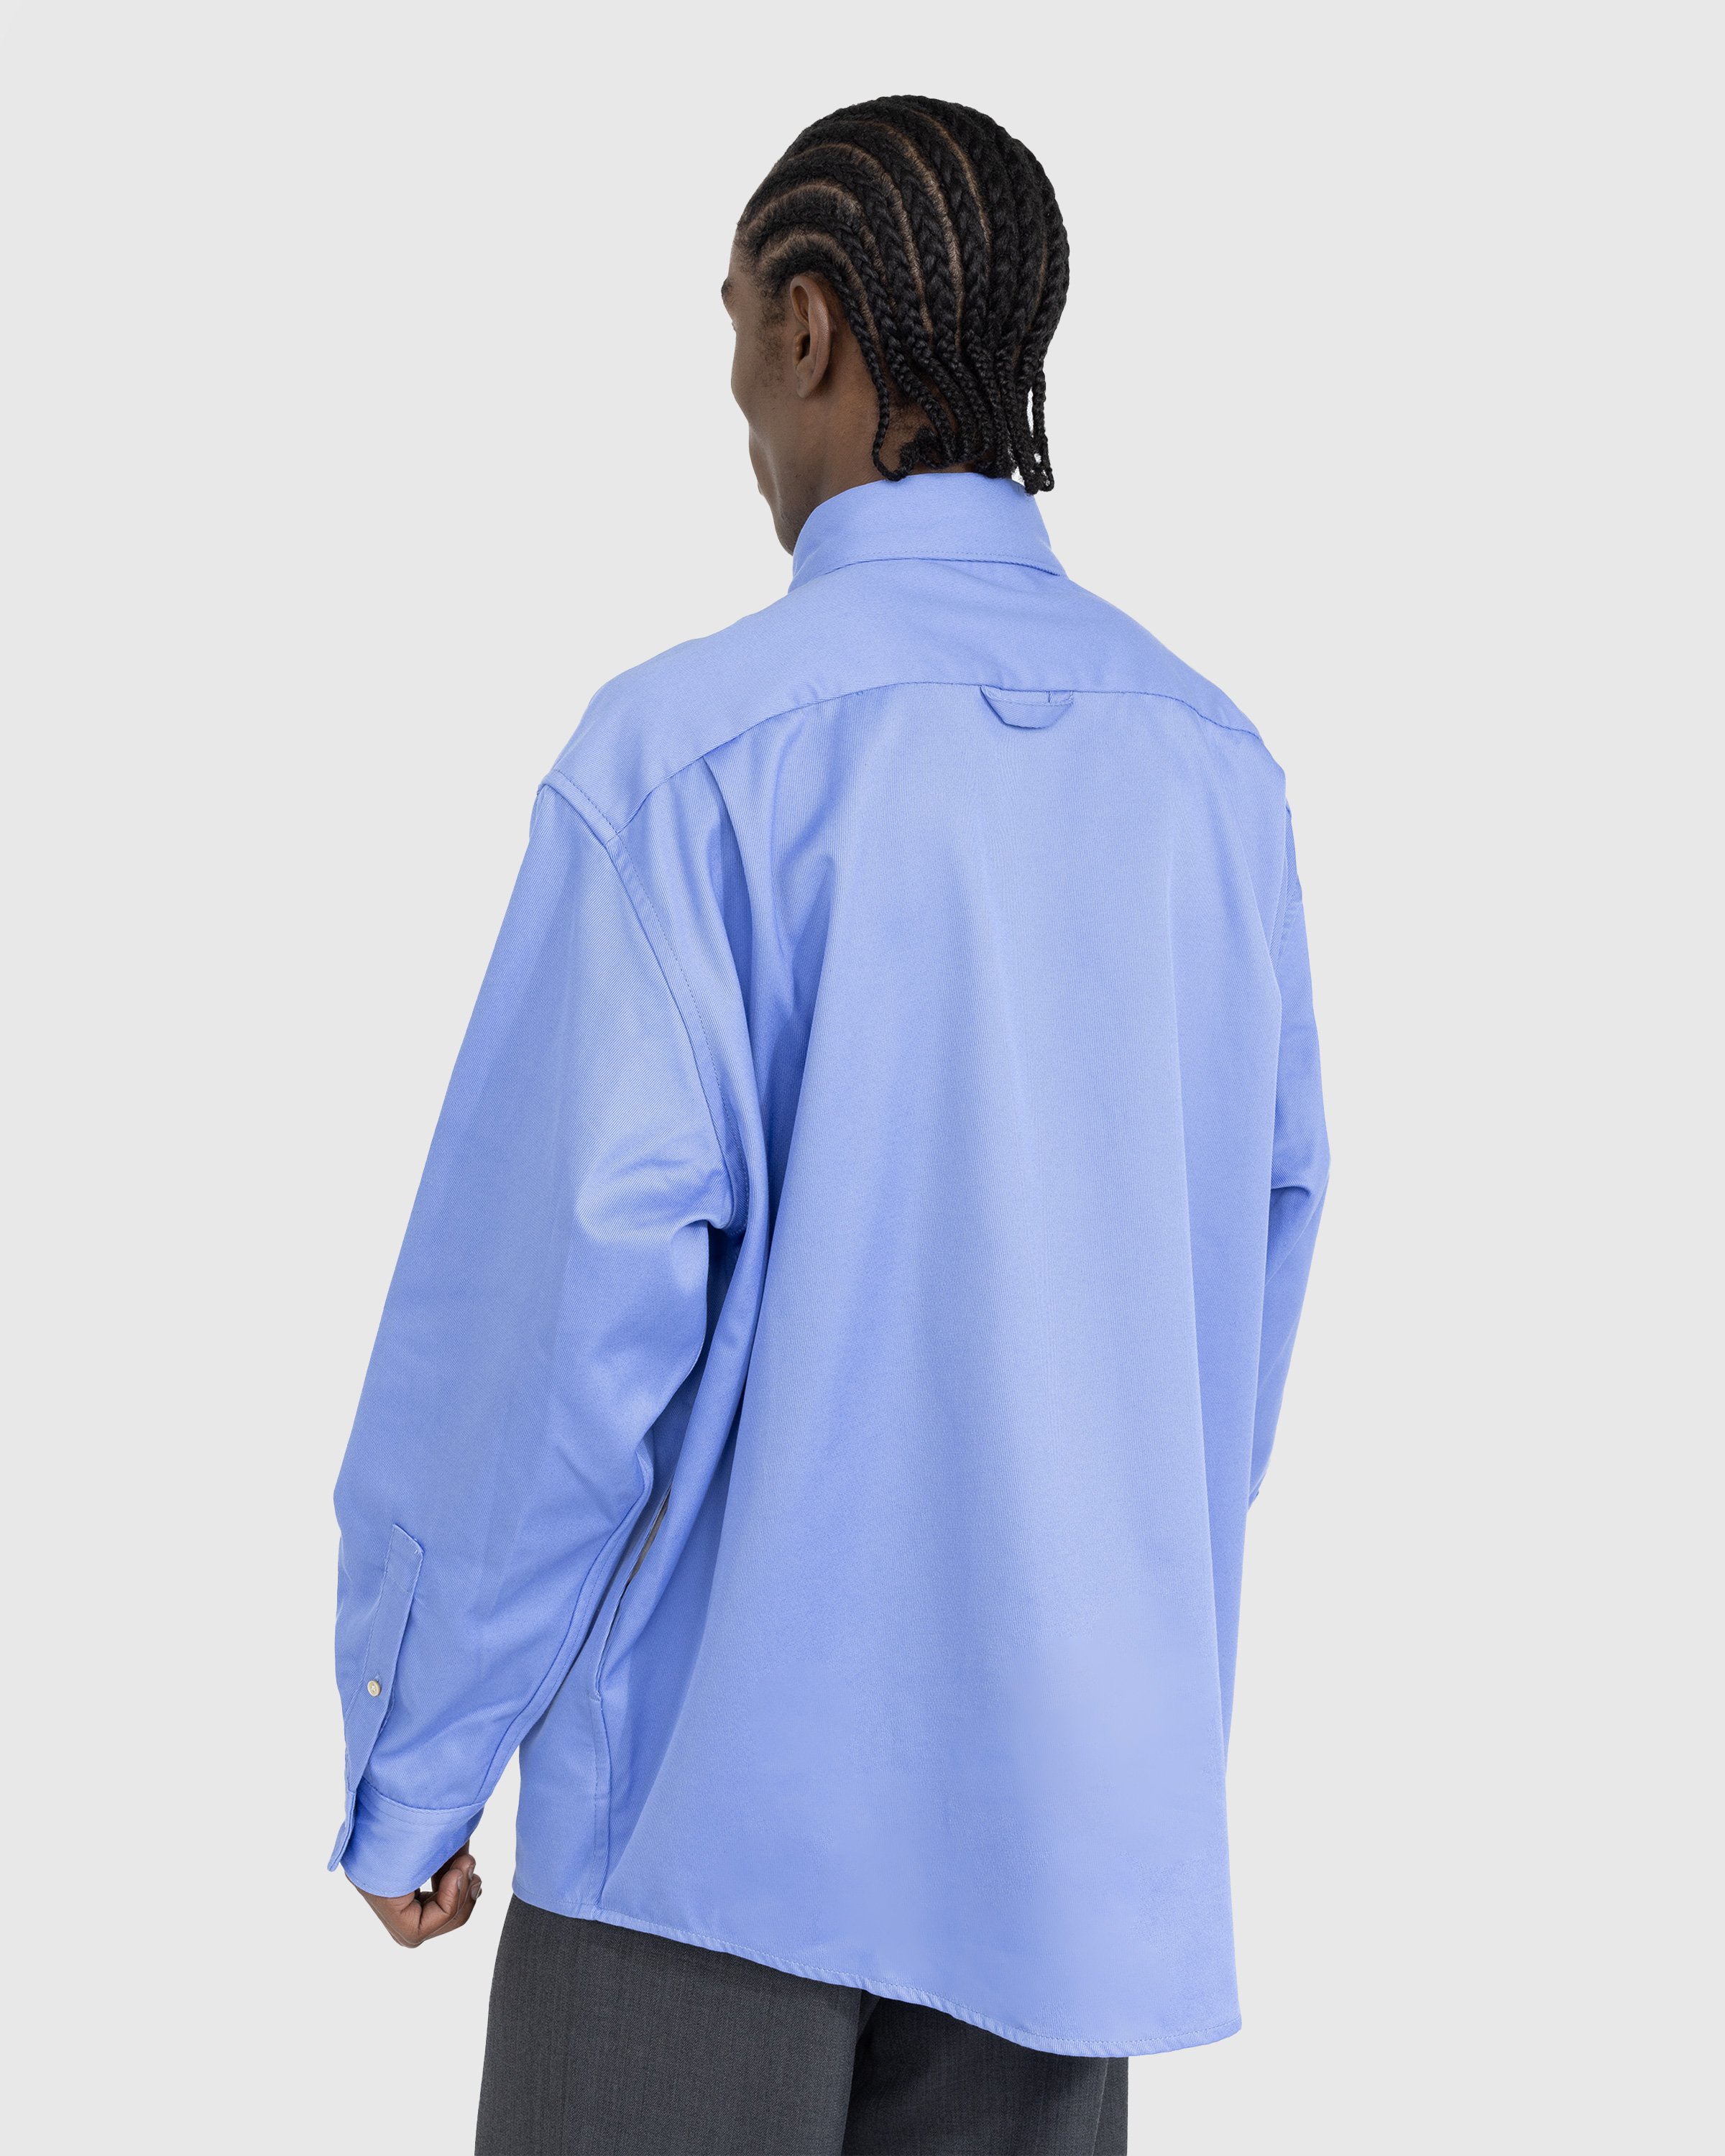 Acne Studios – Button-Up Overshirt Cornflower Blue | Highsnobiety Shop